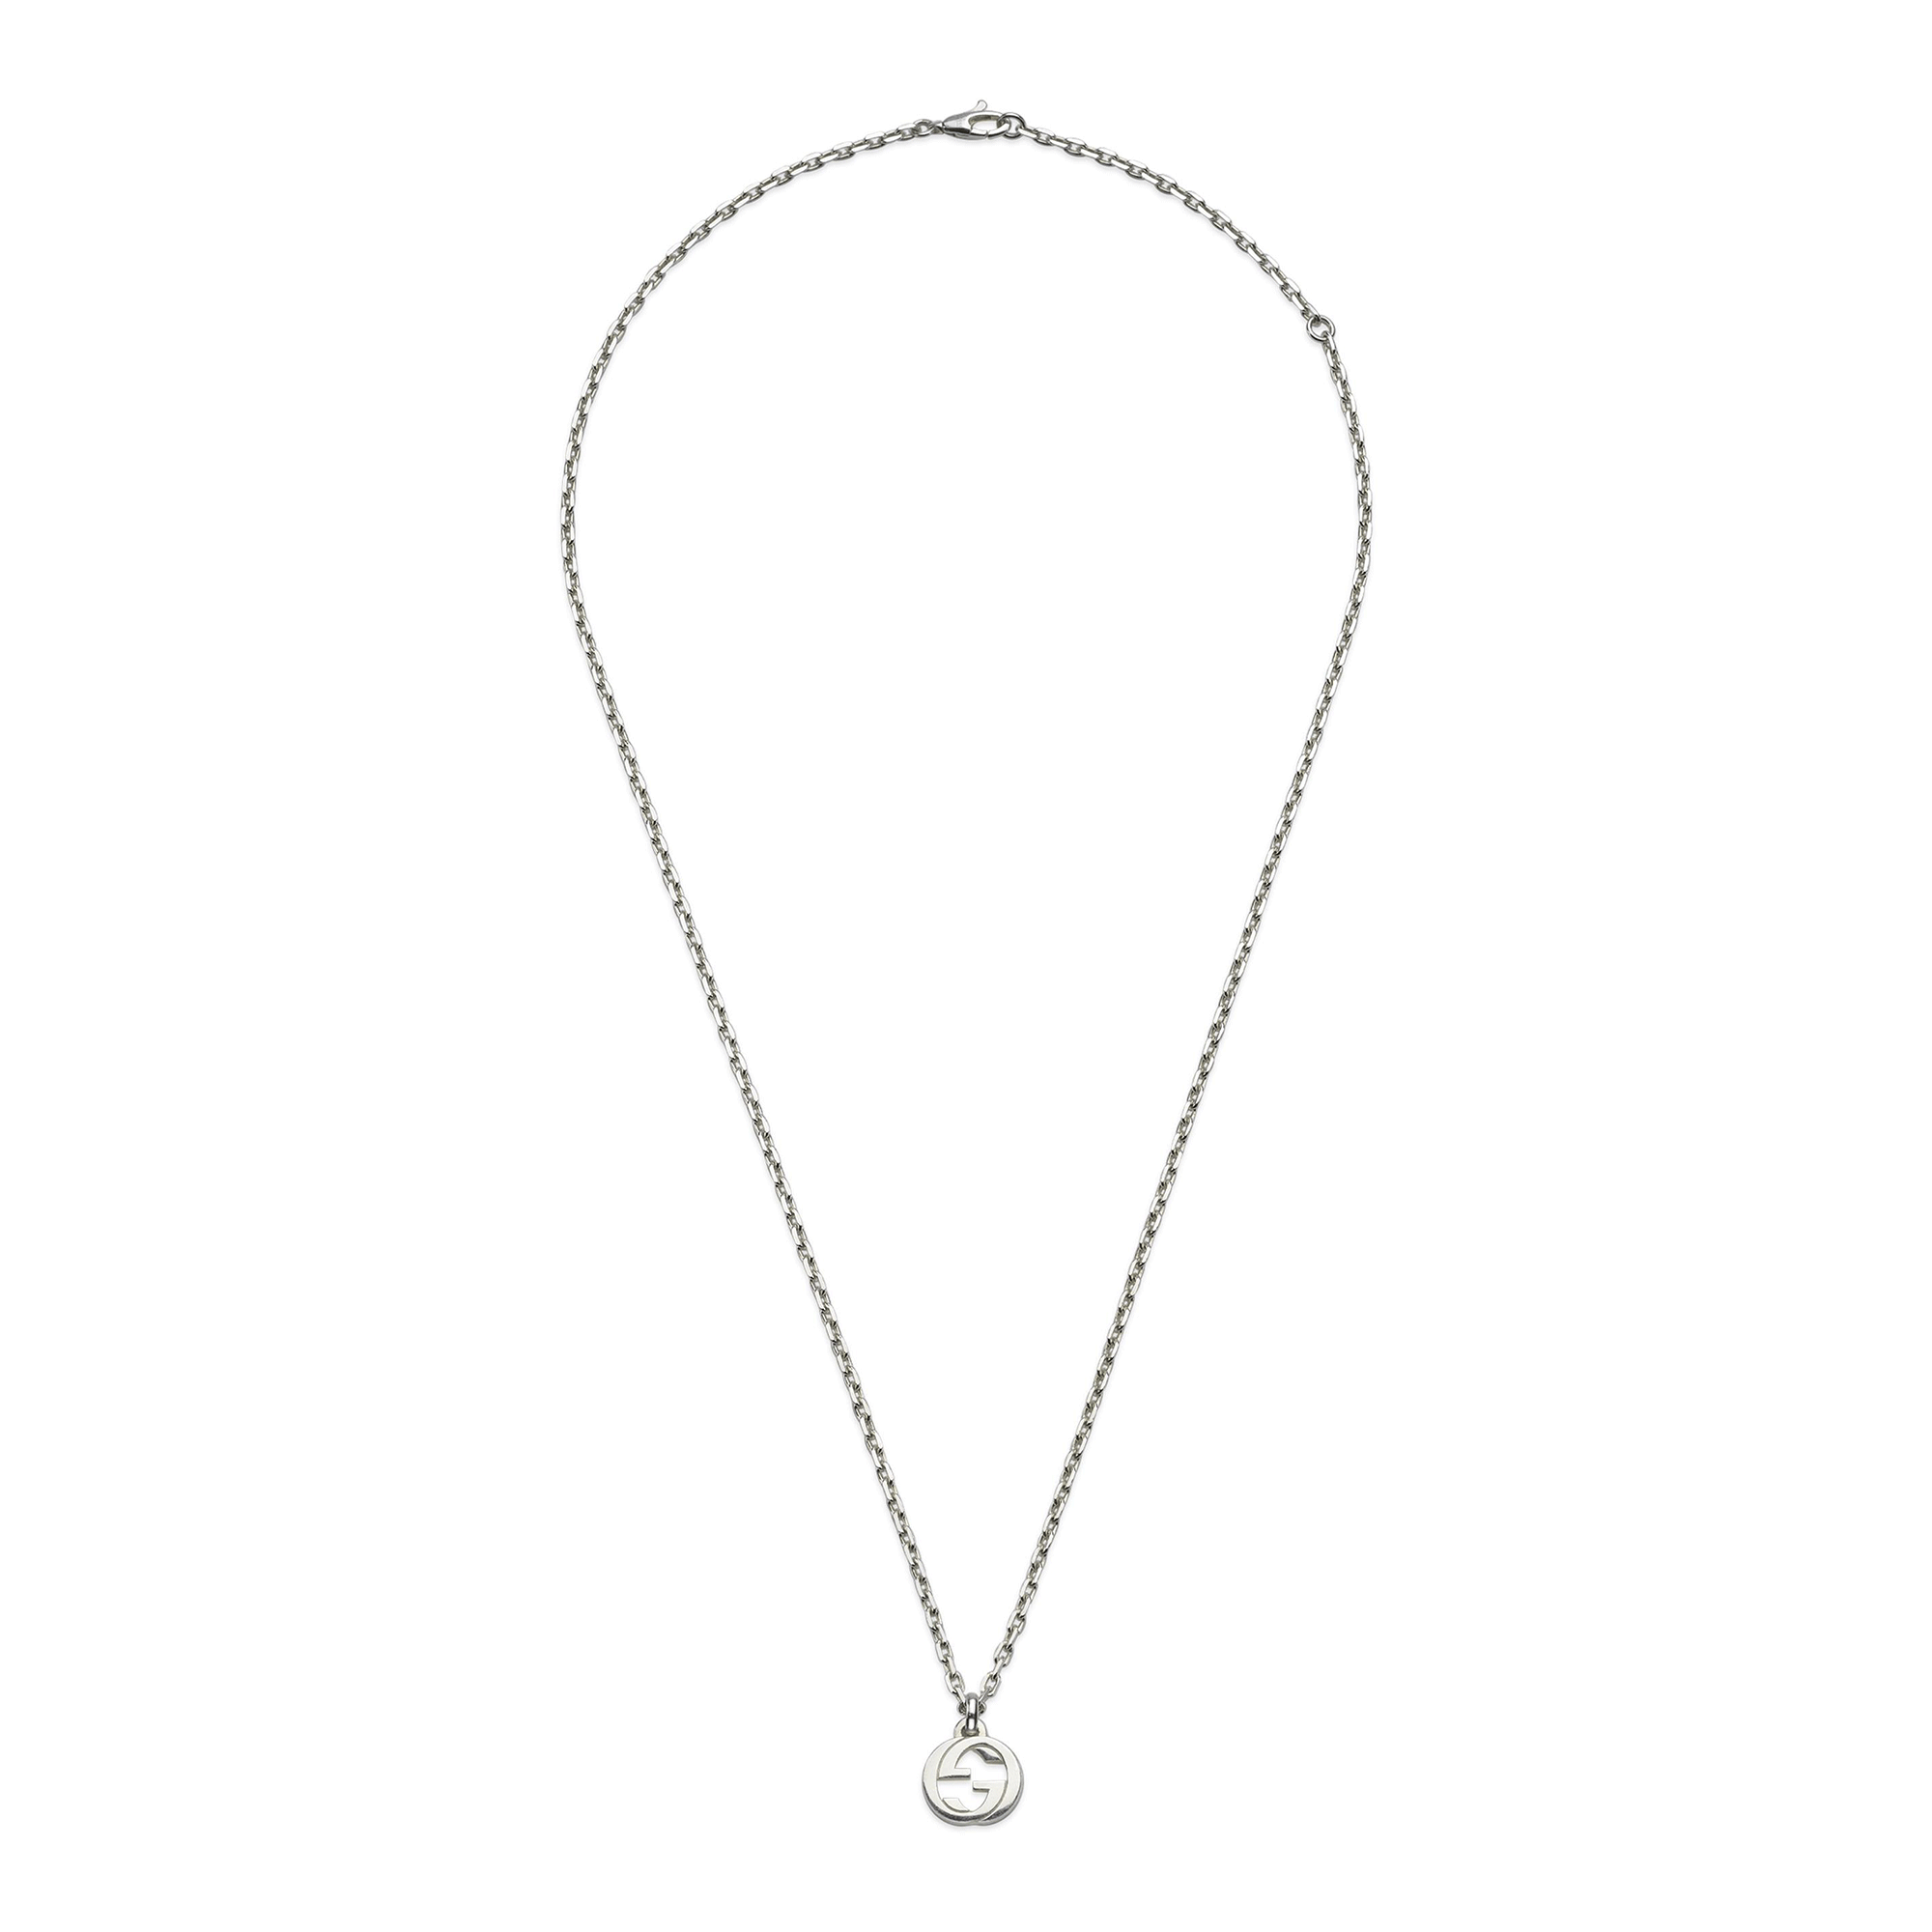 Interlocking Sterling Silver Necklace